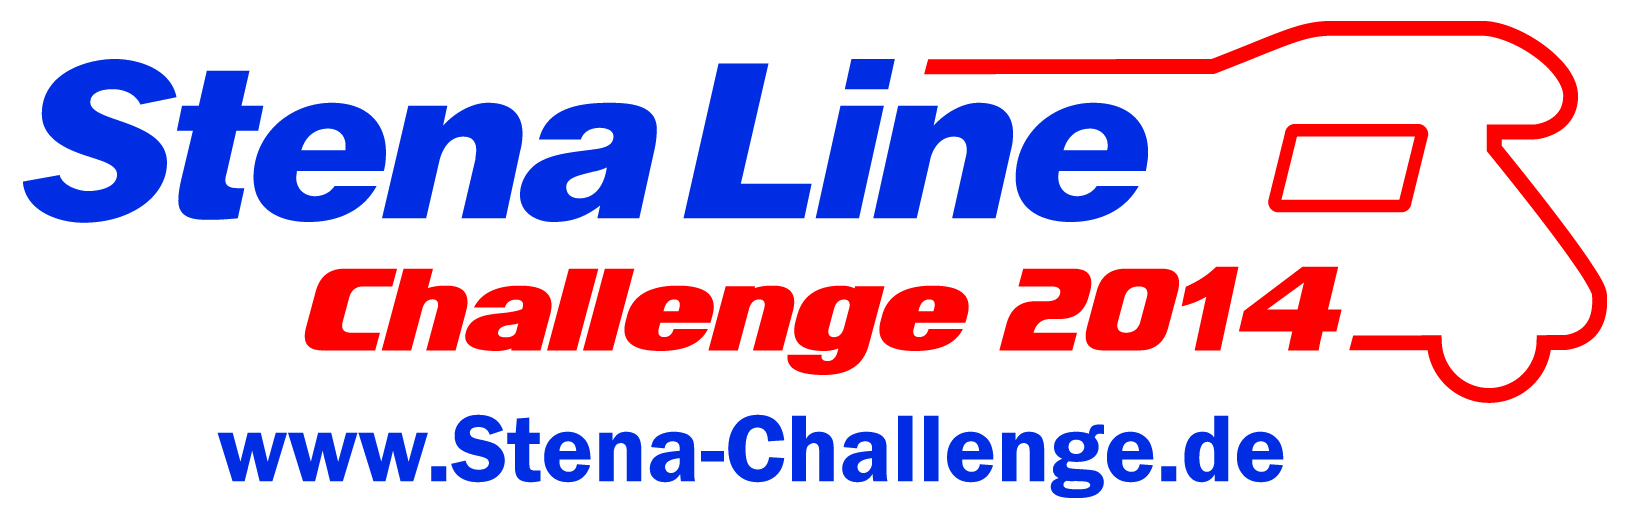 logo_challenge-2014_01_rz_01